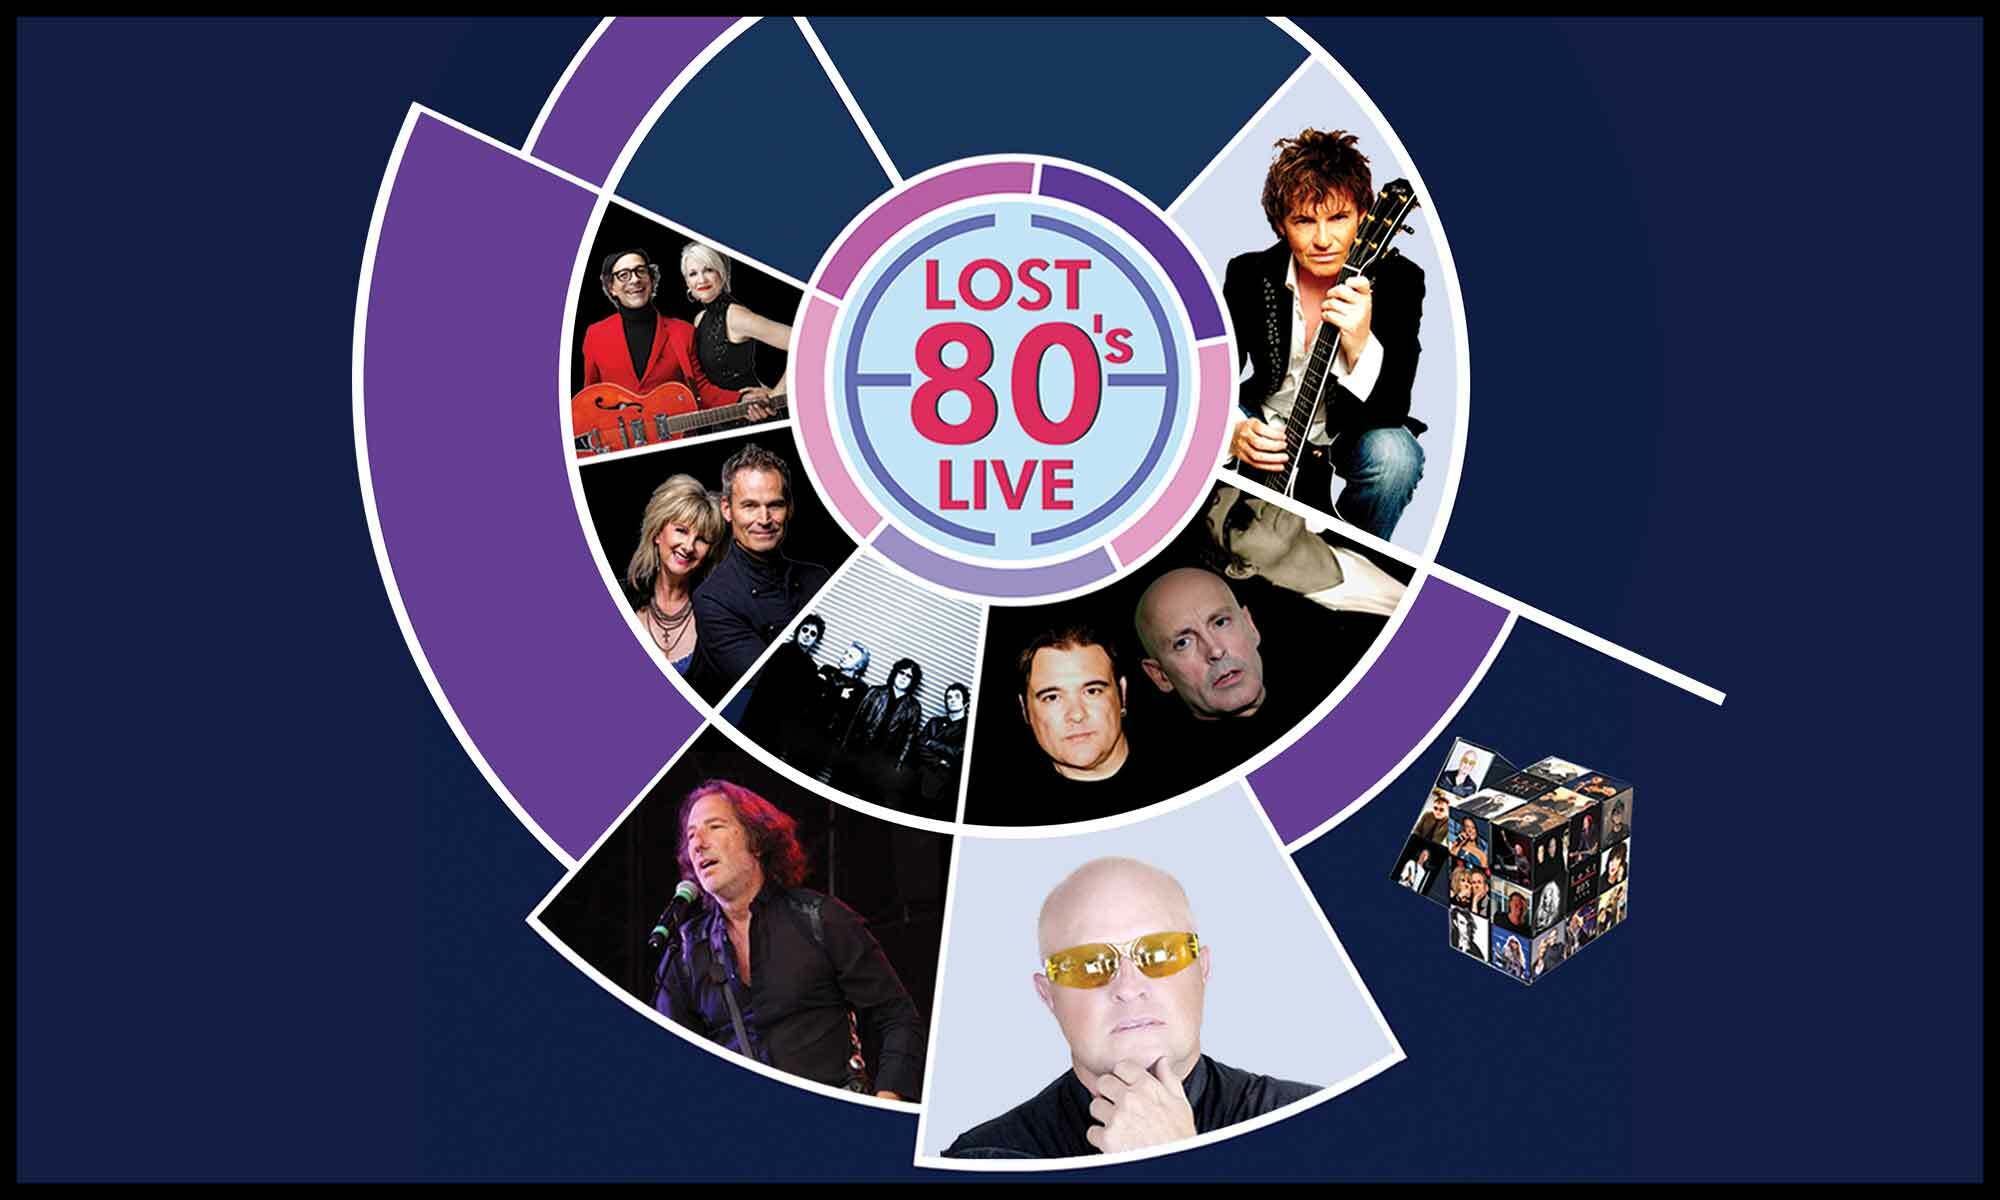 Lost 80's Live Live Concert